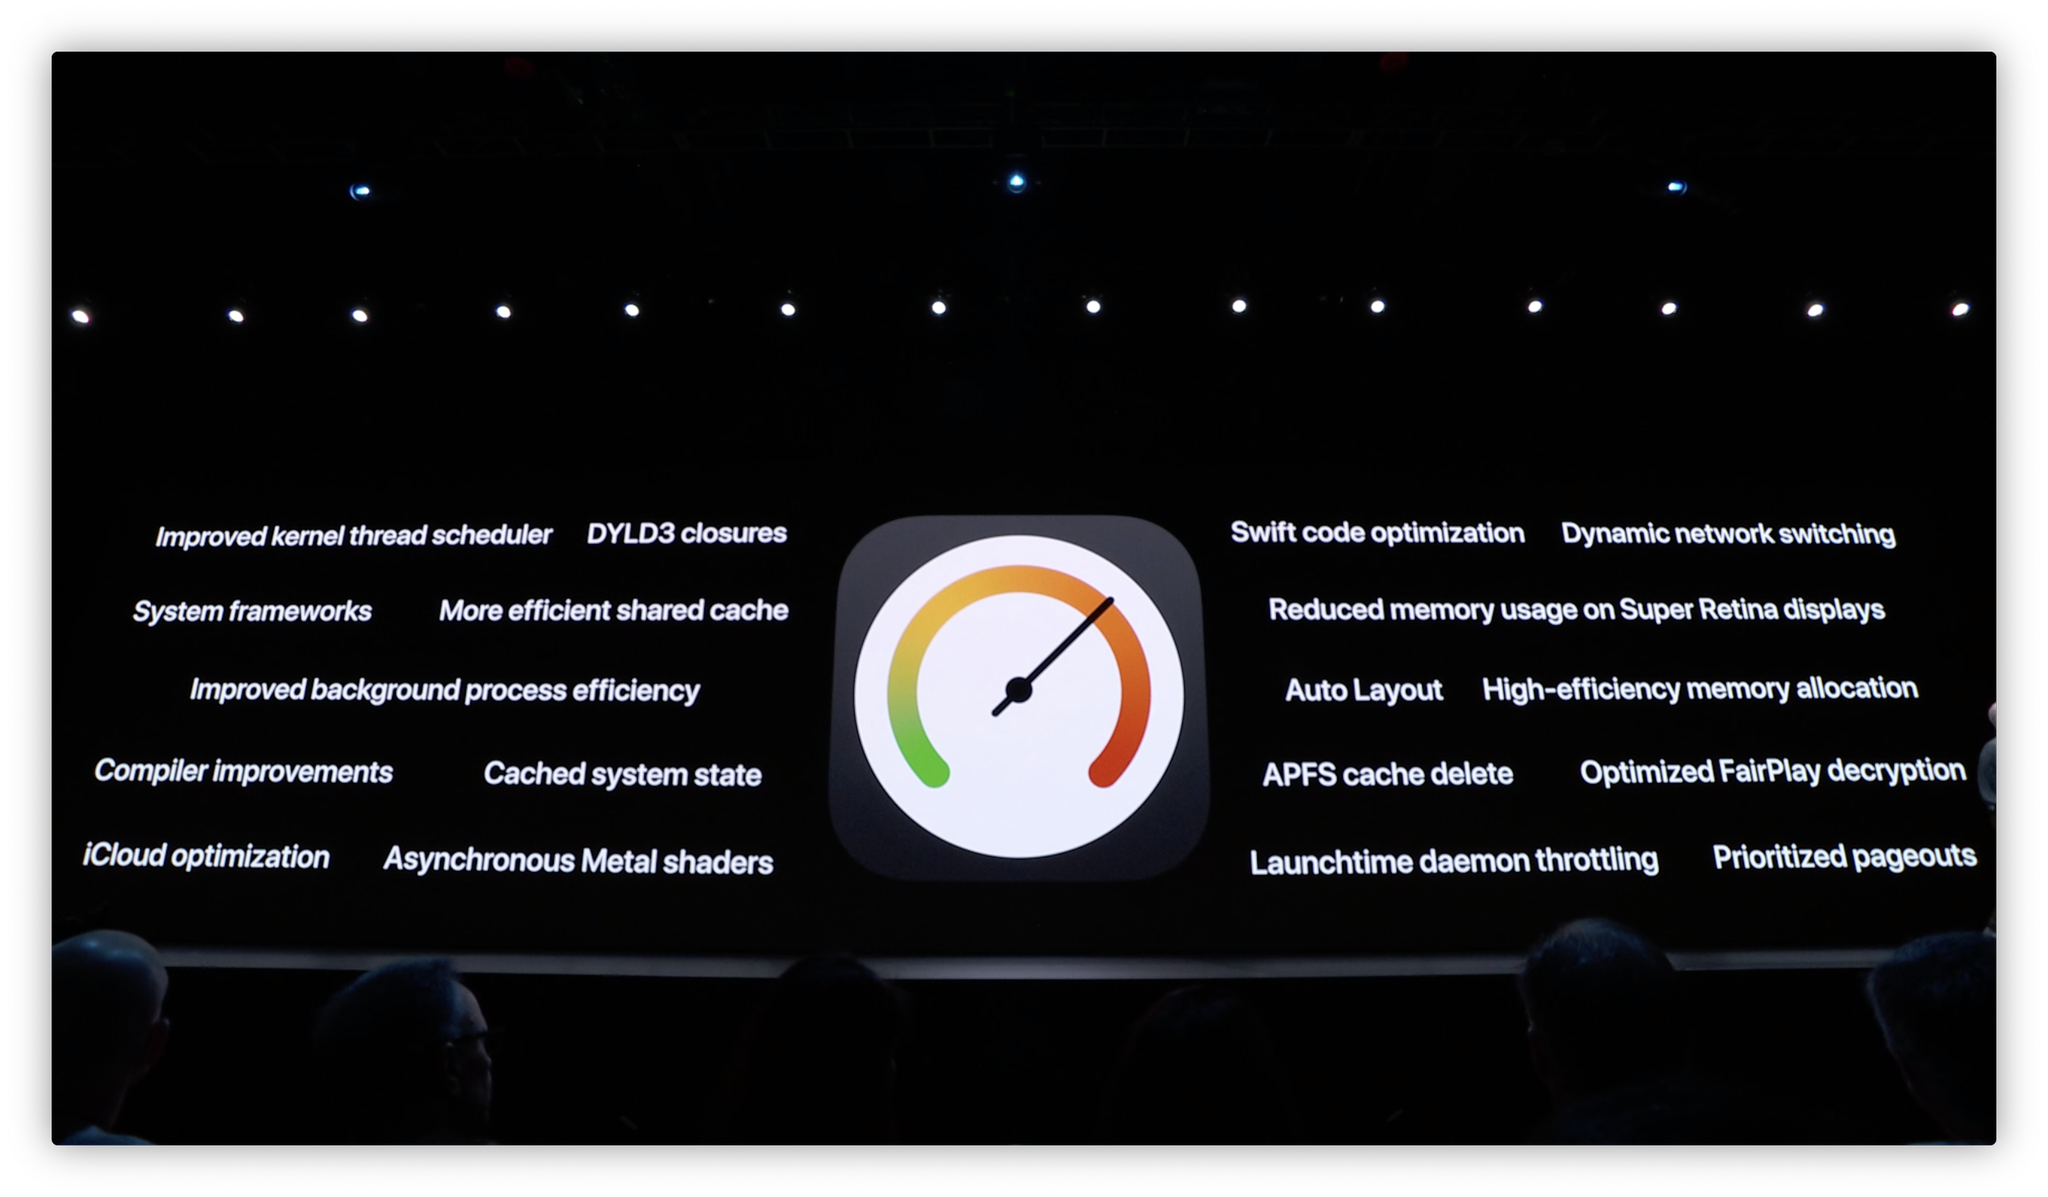 iOS 13 optimization improvements